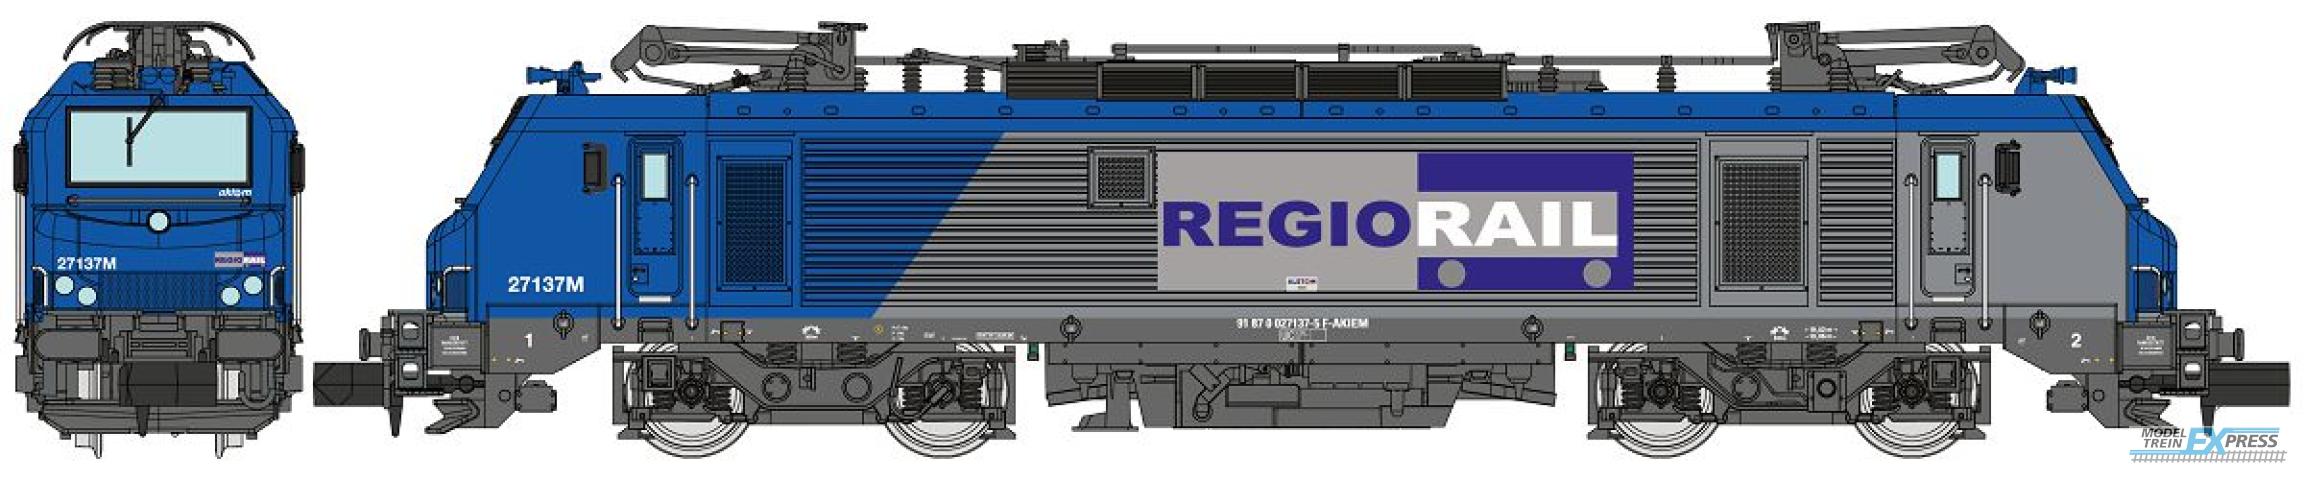 REE models NW-297 Electric locomotive BB 27137M, REGIO RAIL blue livery, Ep.VI